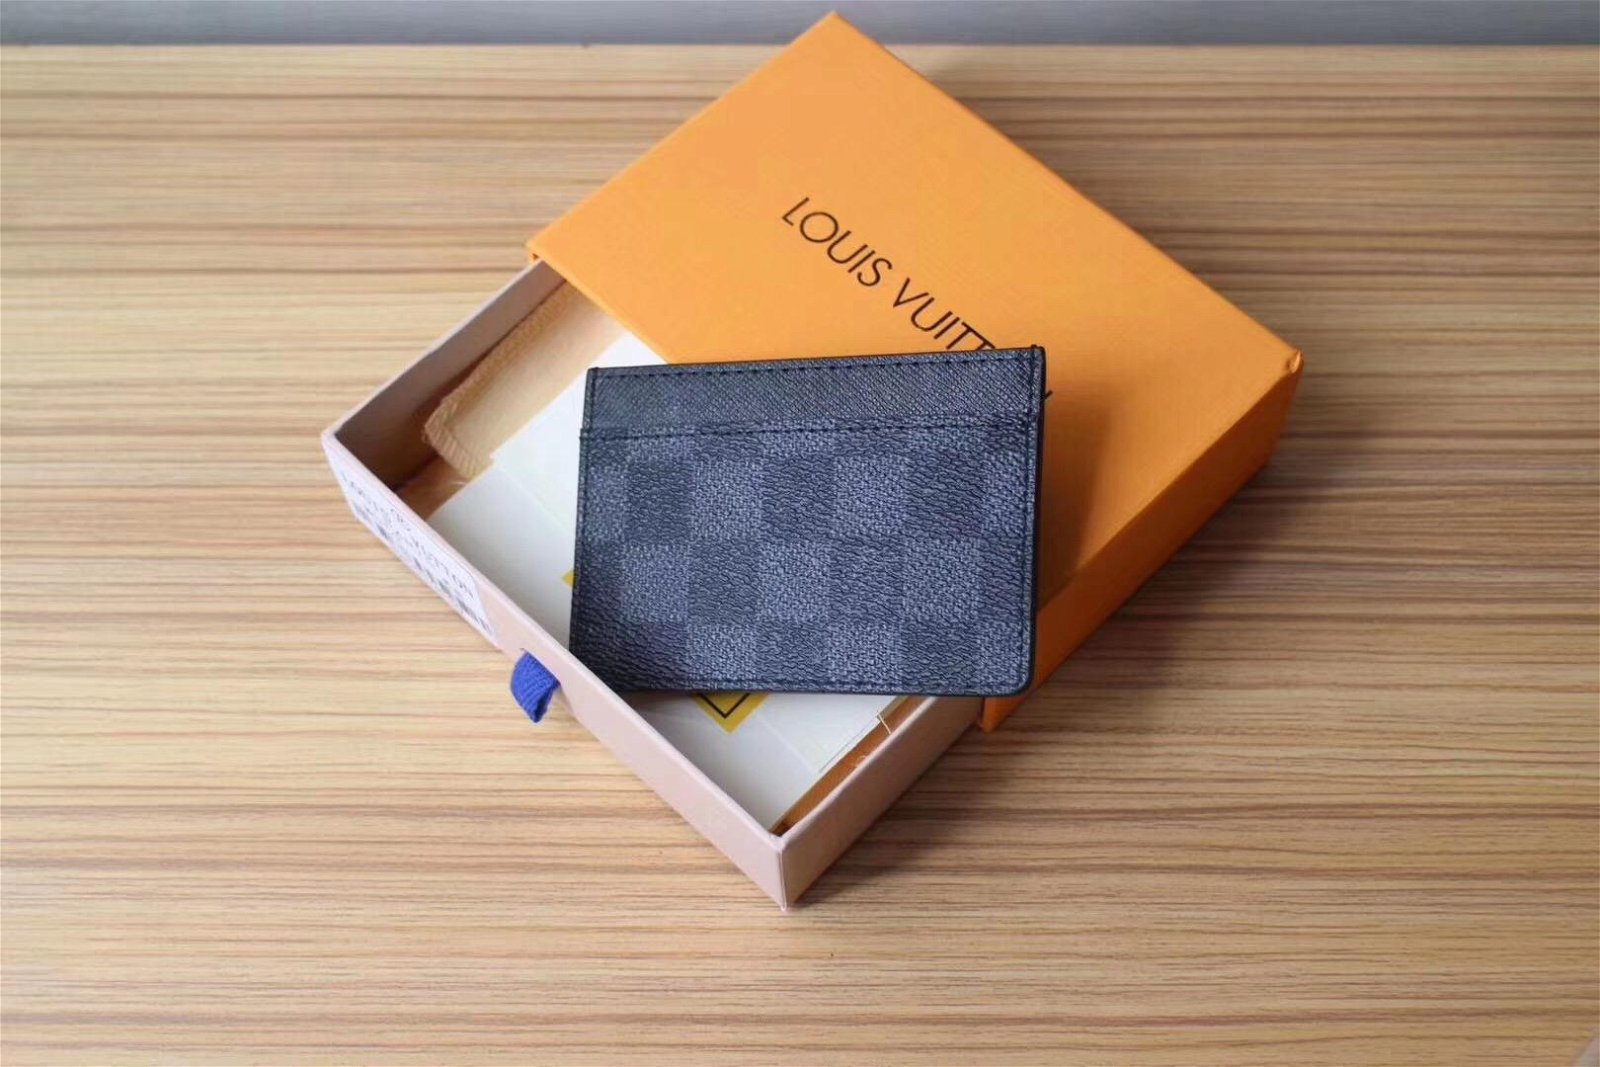 Cheap LV Wallet Lv purse Box lv bag high quality (China Trading Company) - Wallet & Purses ...